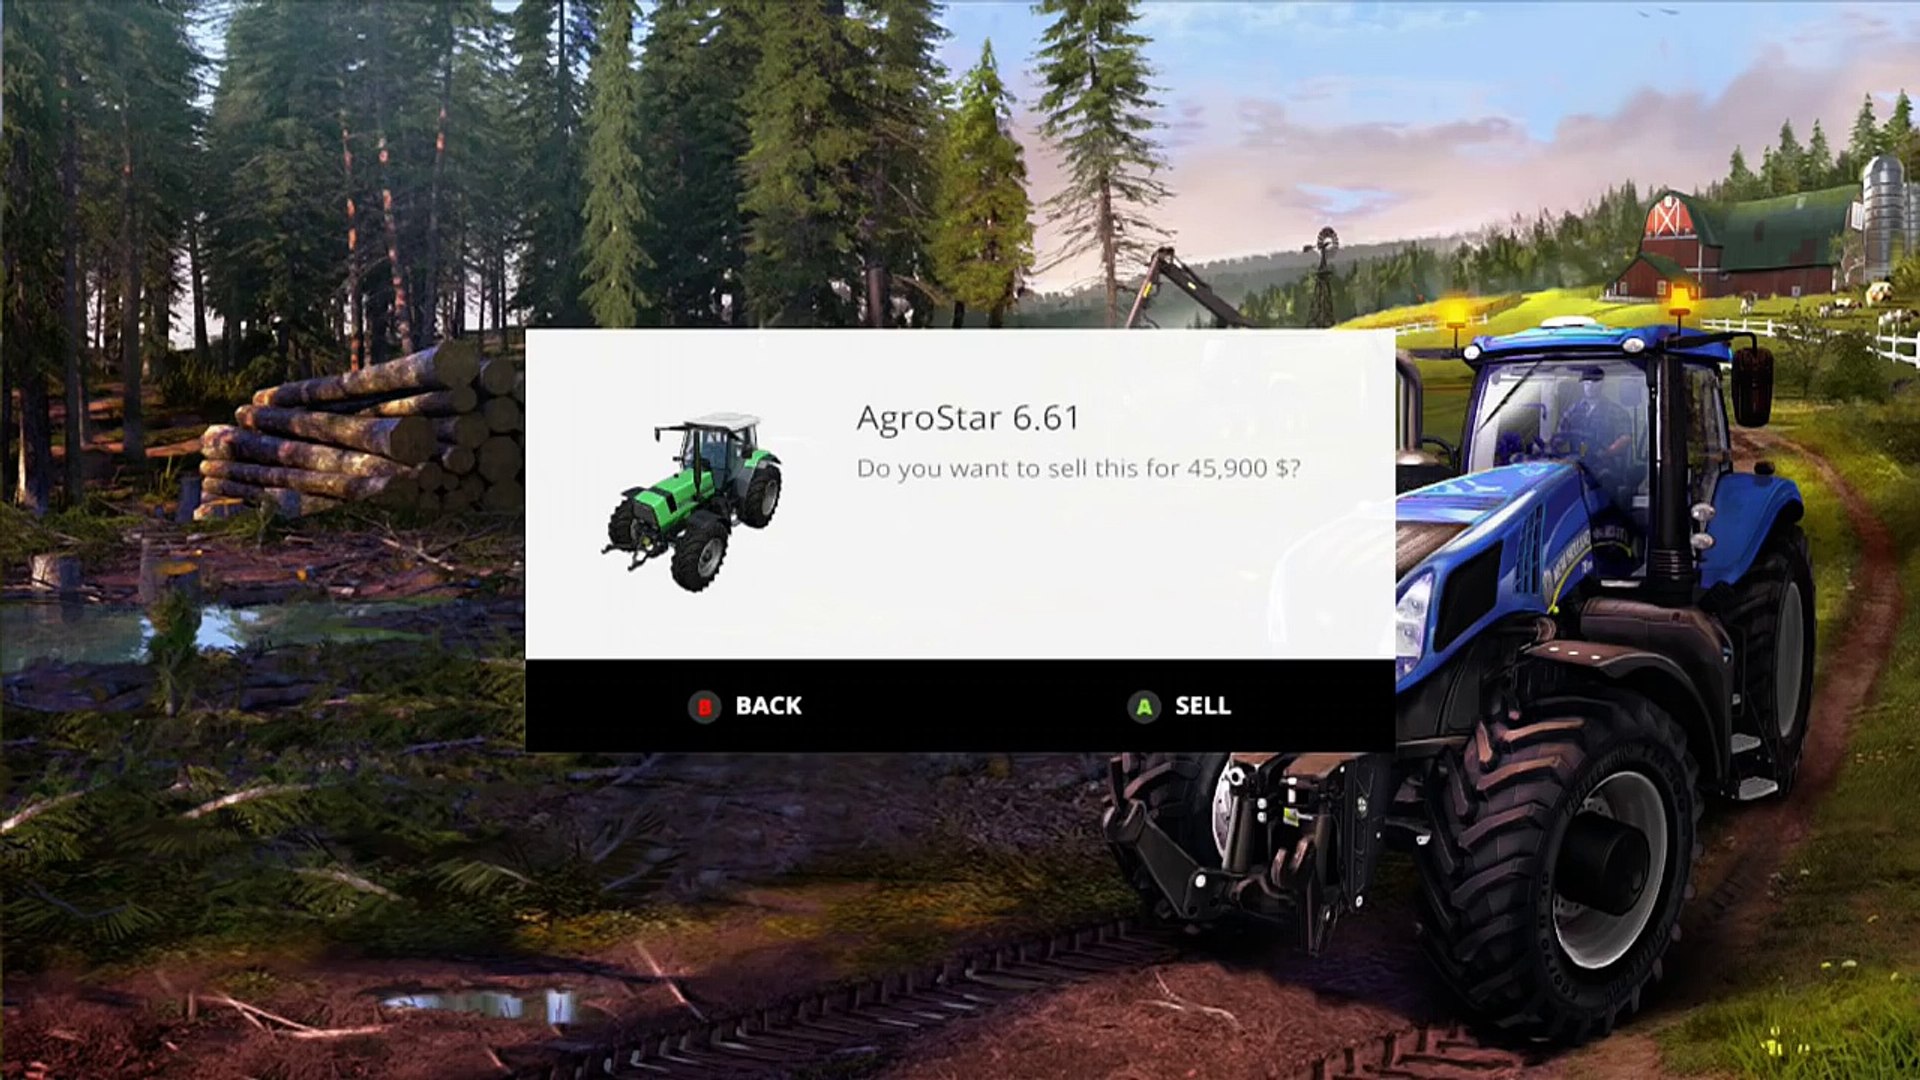 Farming Simulator - Xbox 360, Xbox 360